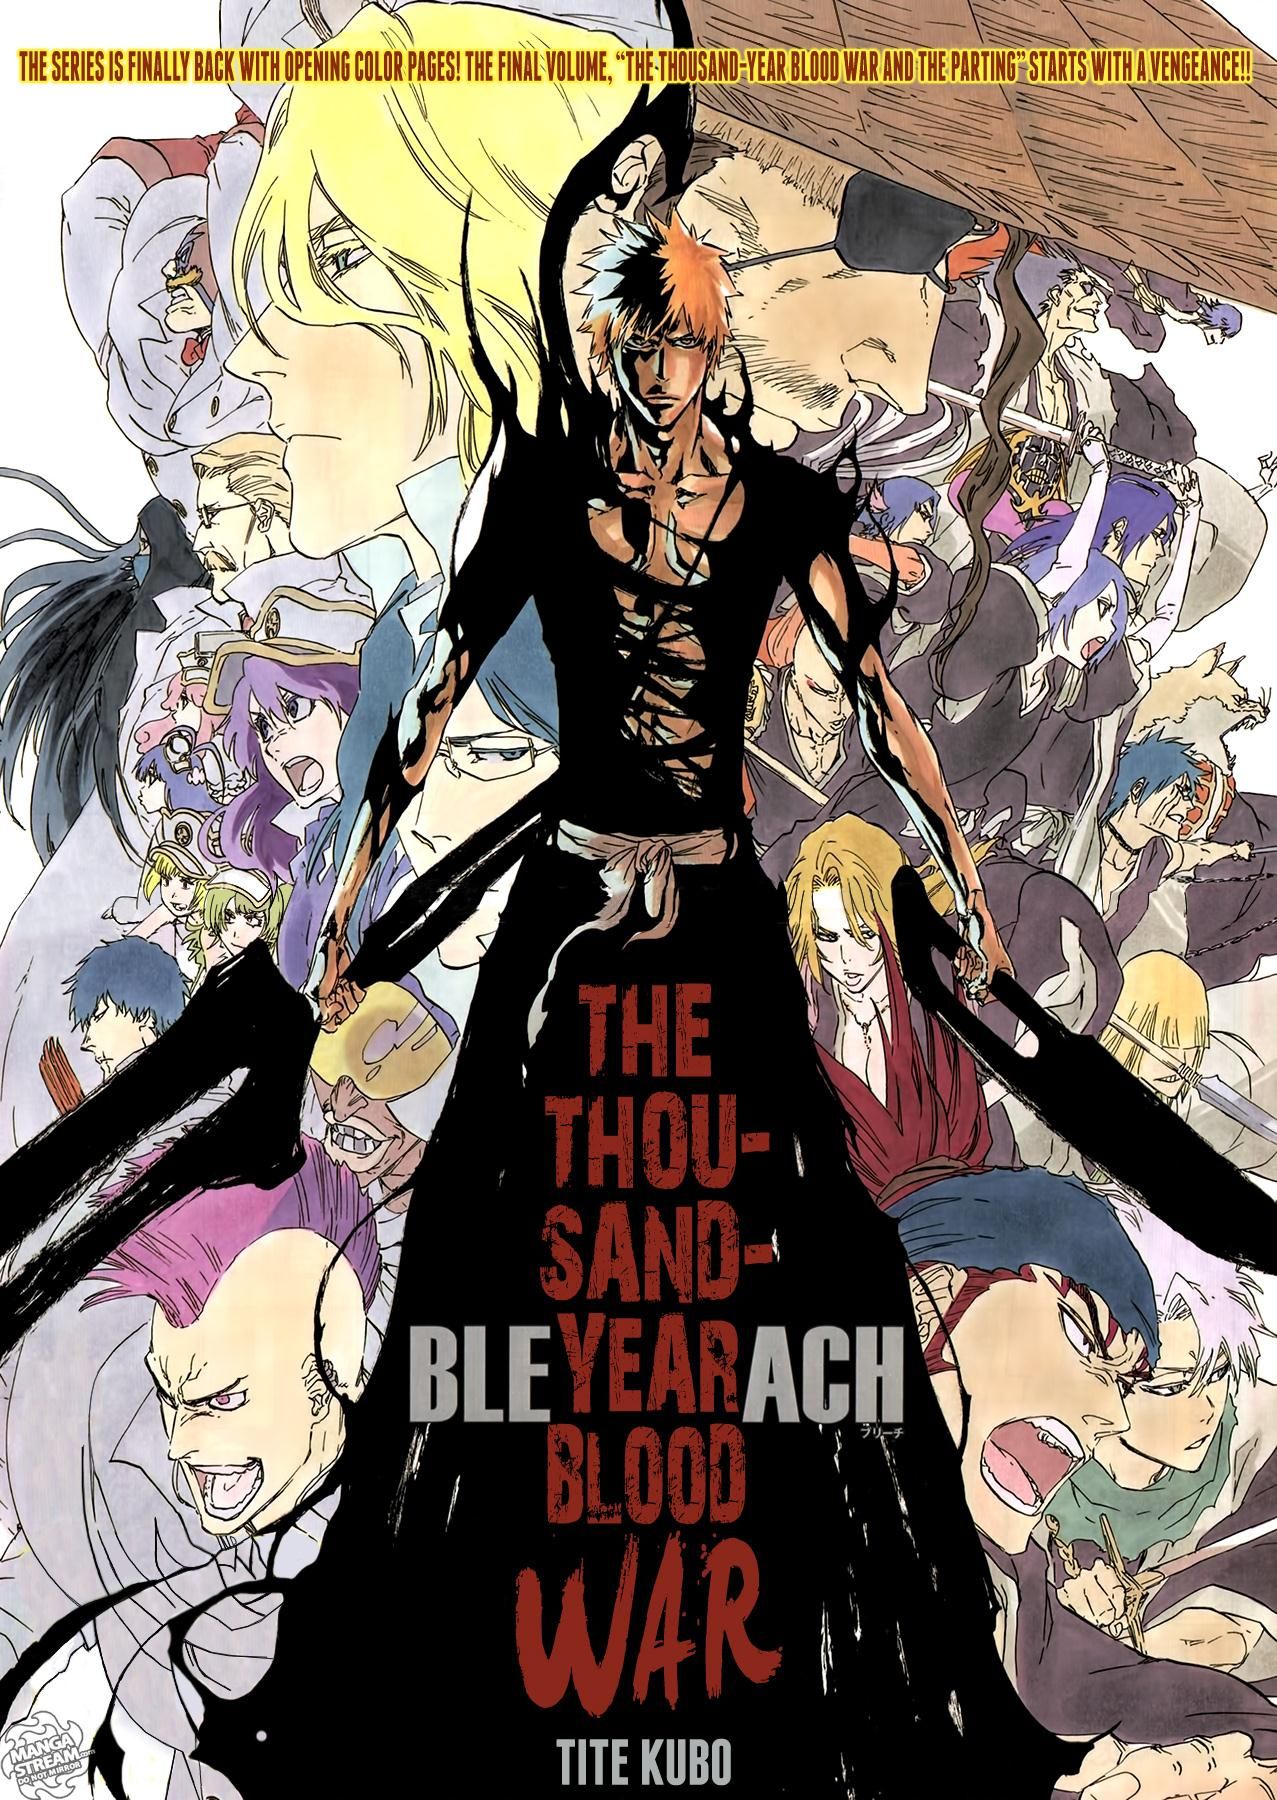 Bleach The Thousand Year Blood War